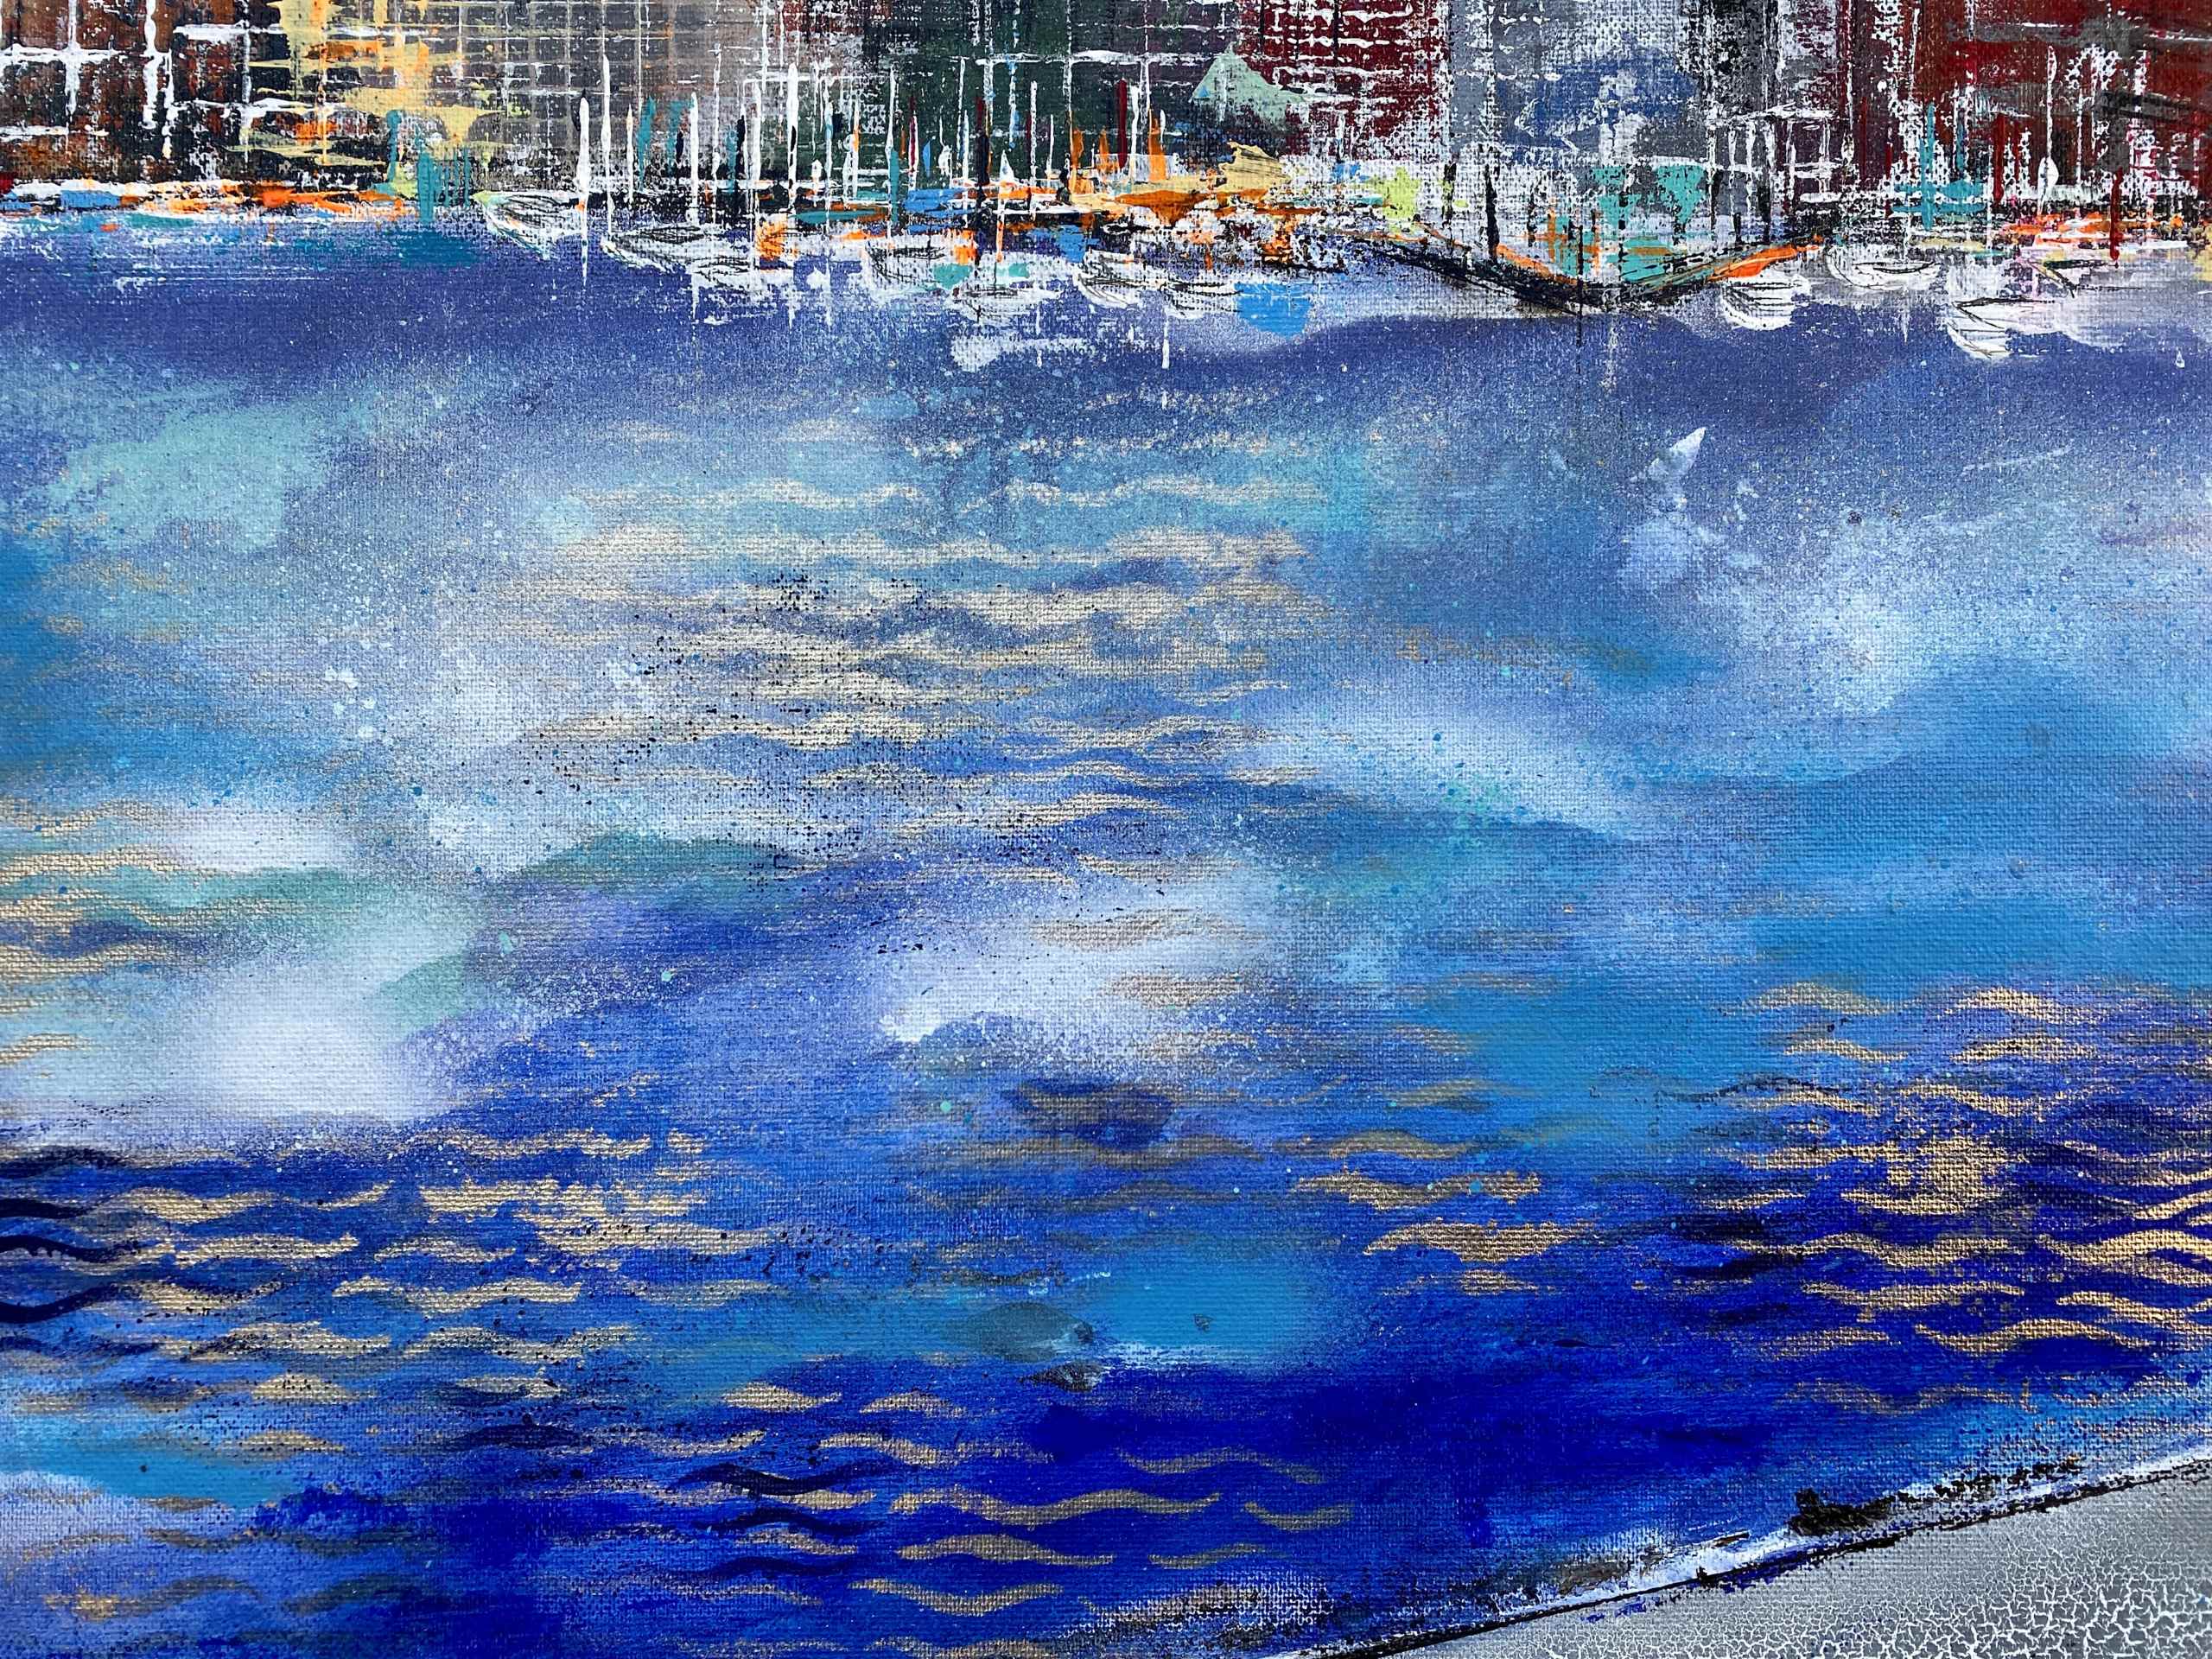 Detail of artwork "Elbphilharmonie" by Nina Groth